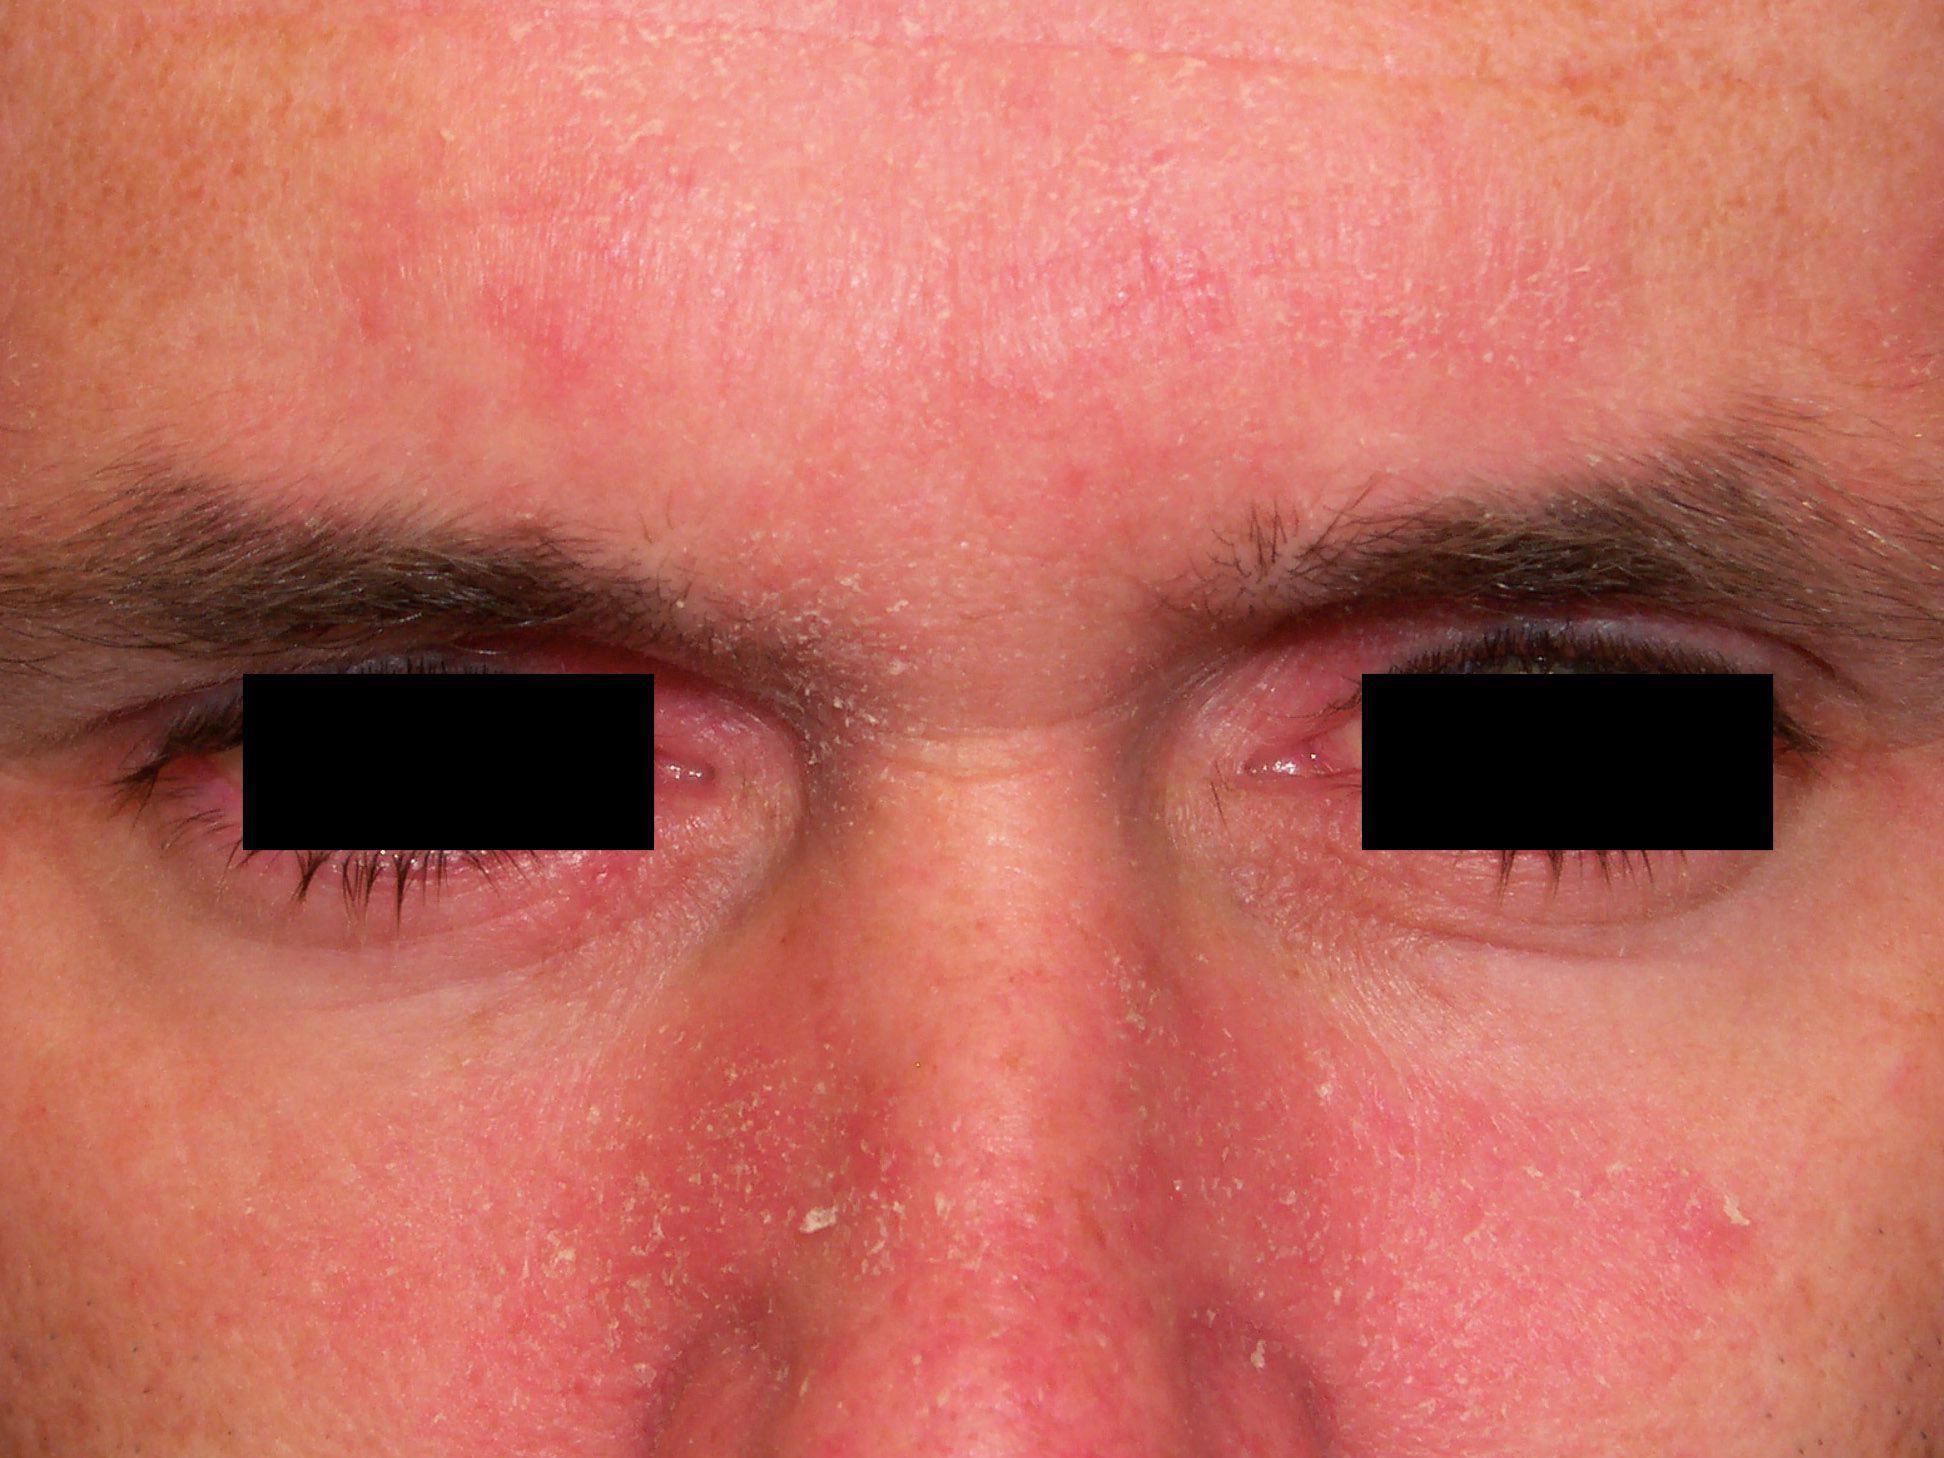 Facial rash hypothyroidism